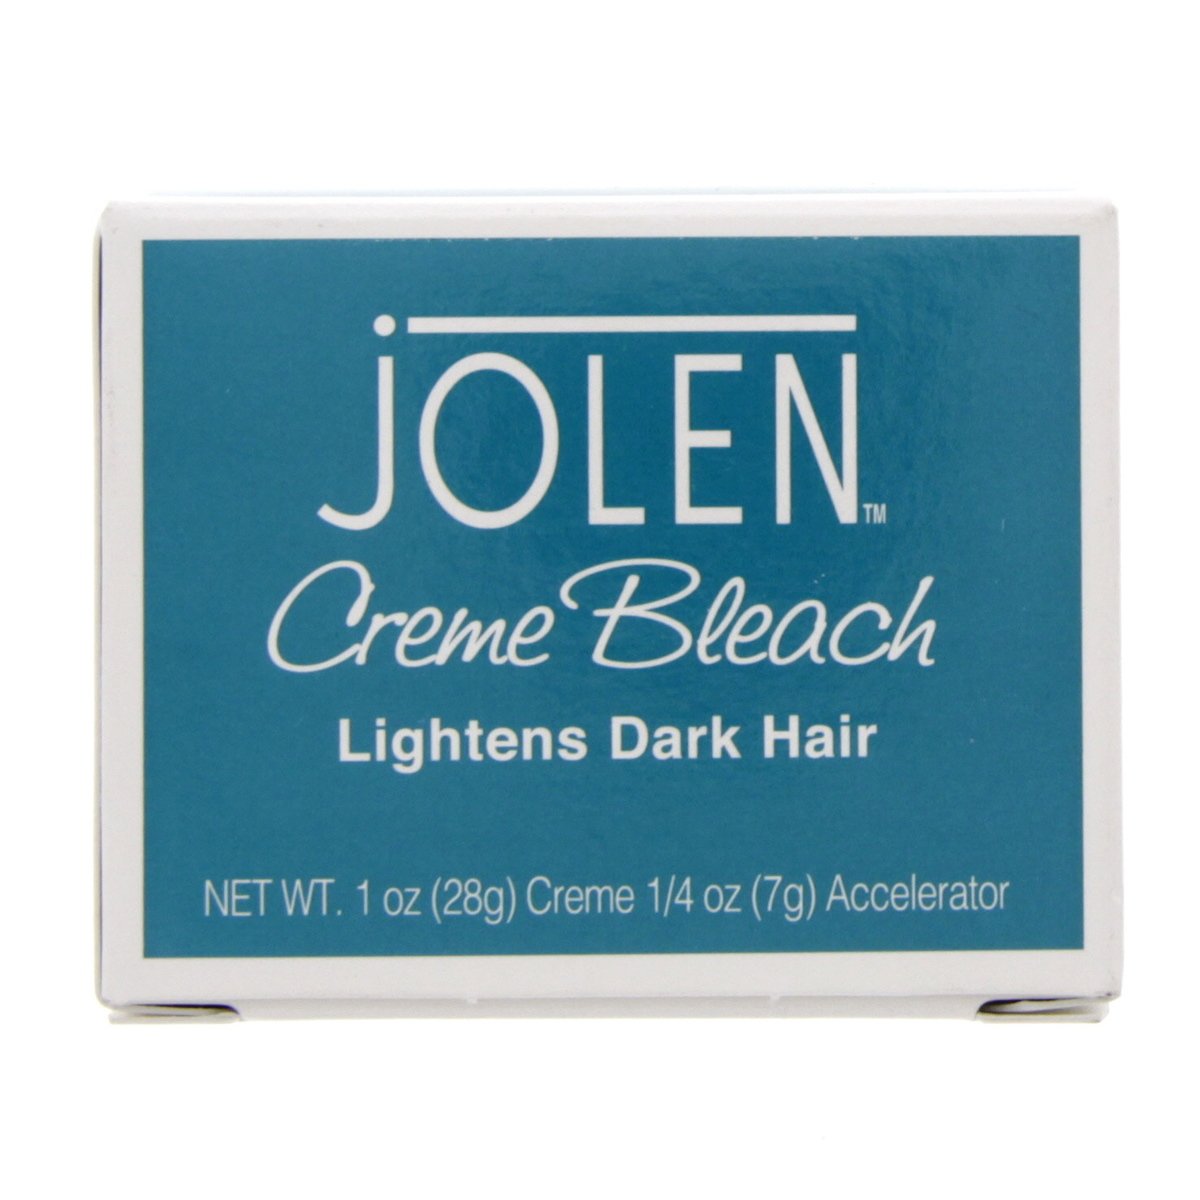 Jolen Creme Bleach Lightens Dark Hair Creme 28 g + Accelerator 7 g